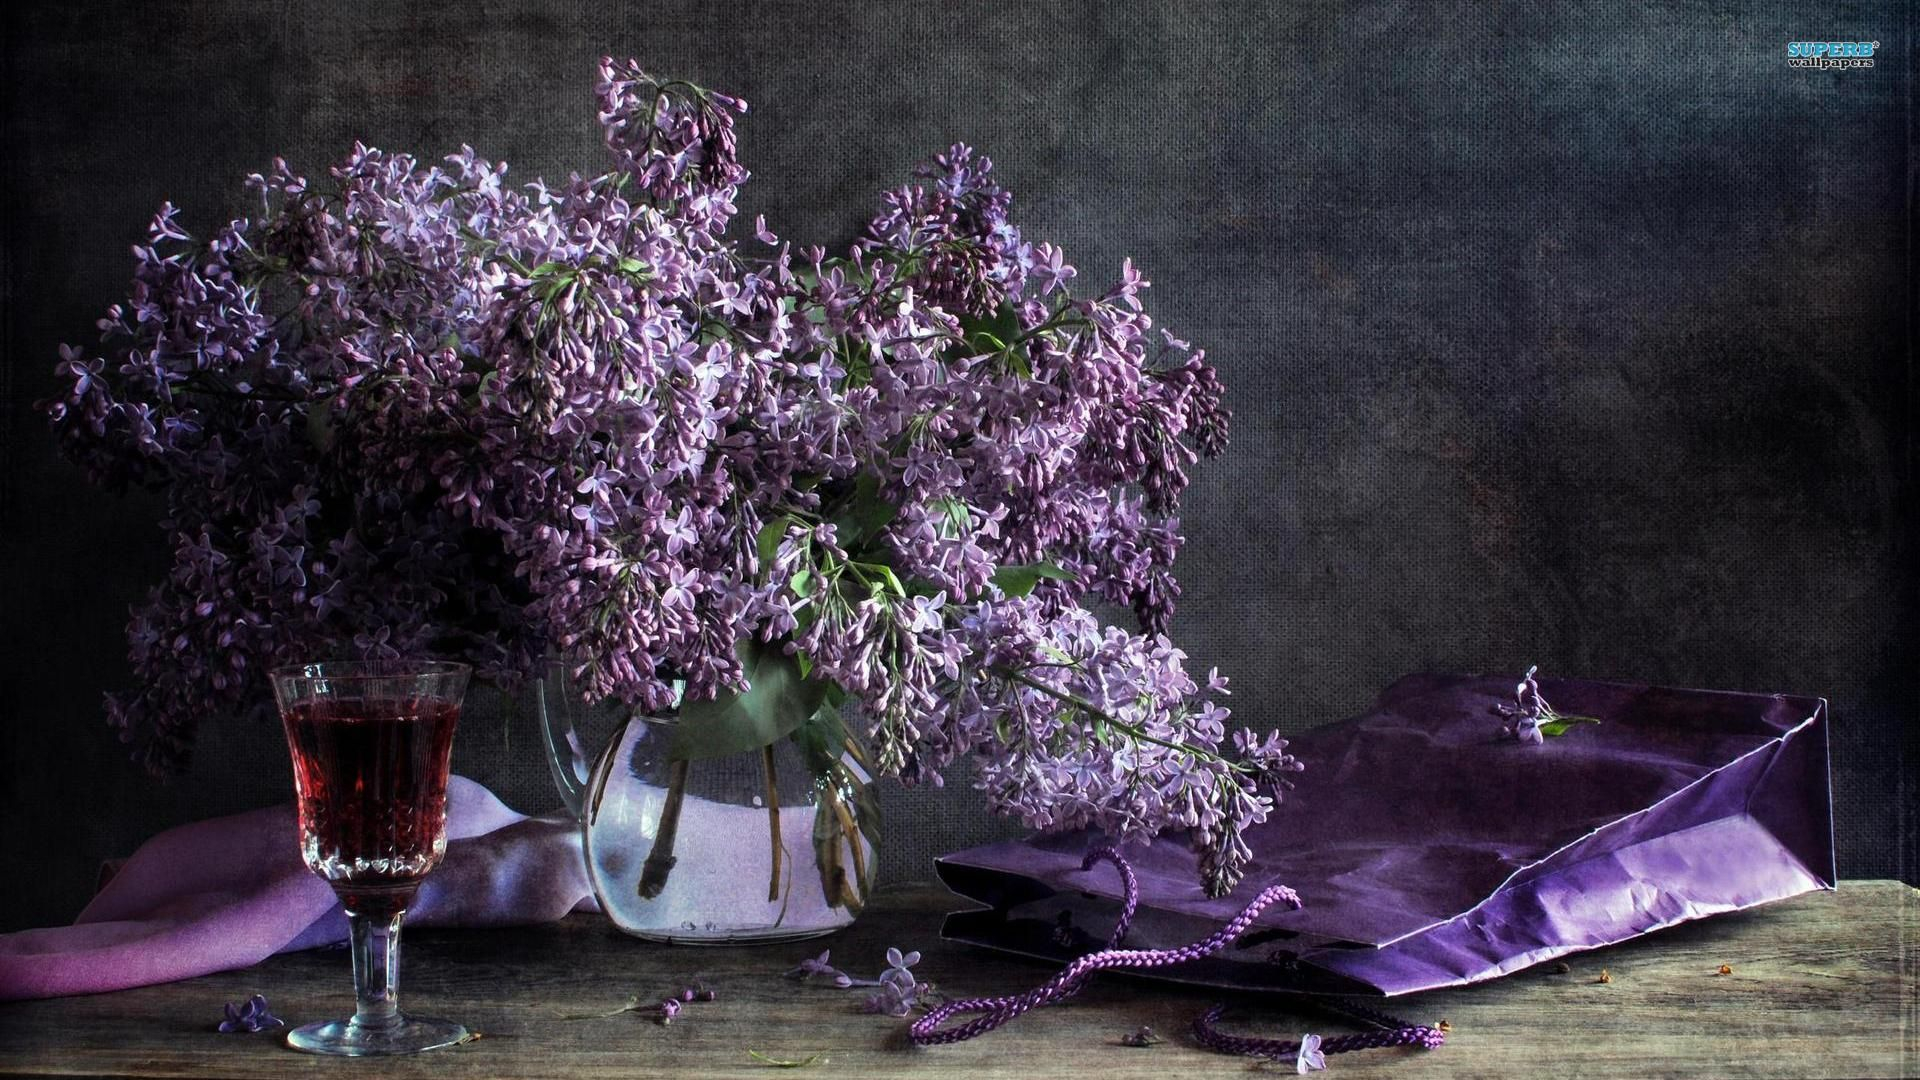 1920x1080 Lilac and Wine | Purple flowers wallpaper, Still life flowers, Artistic wallpaper